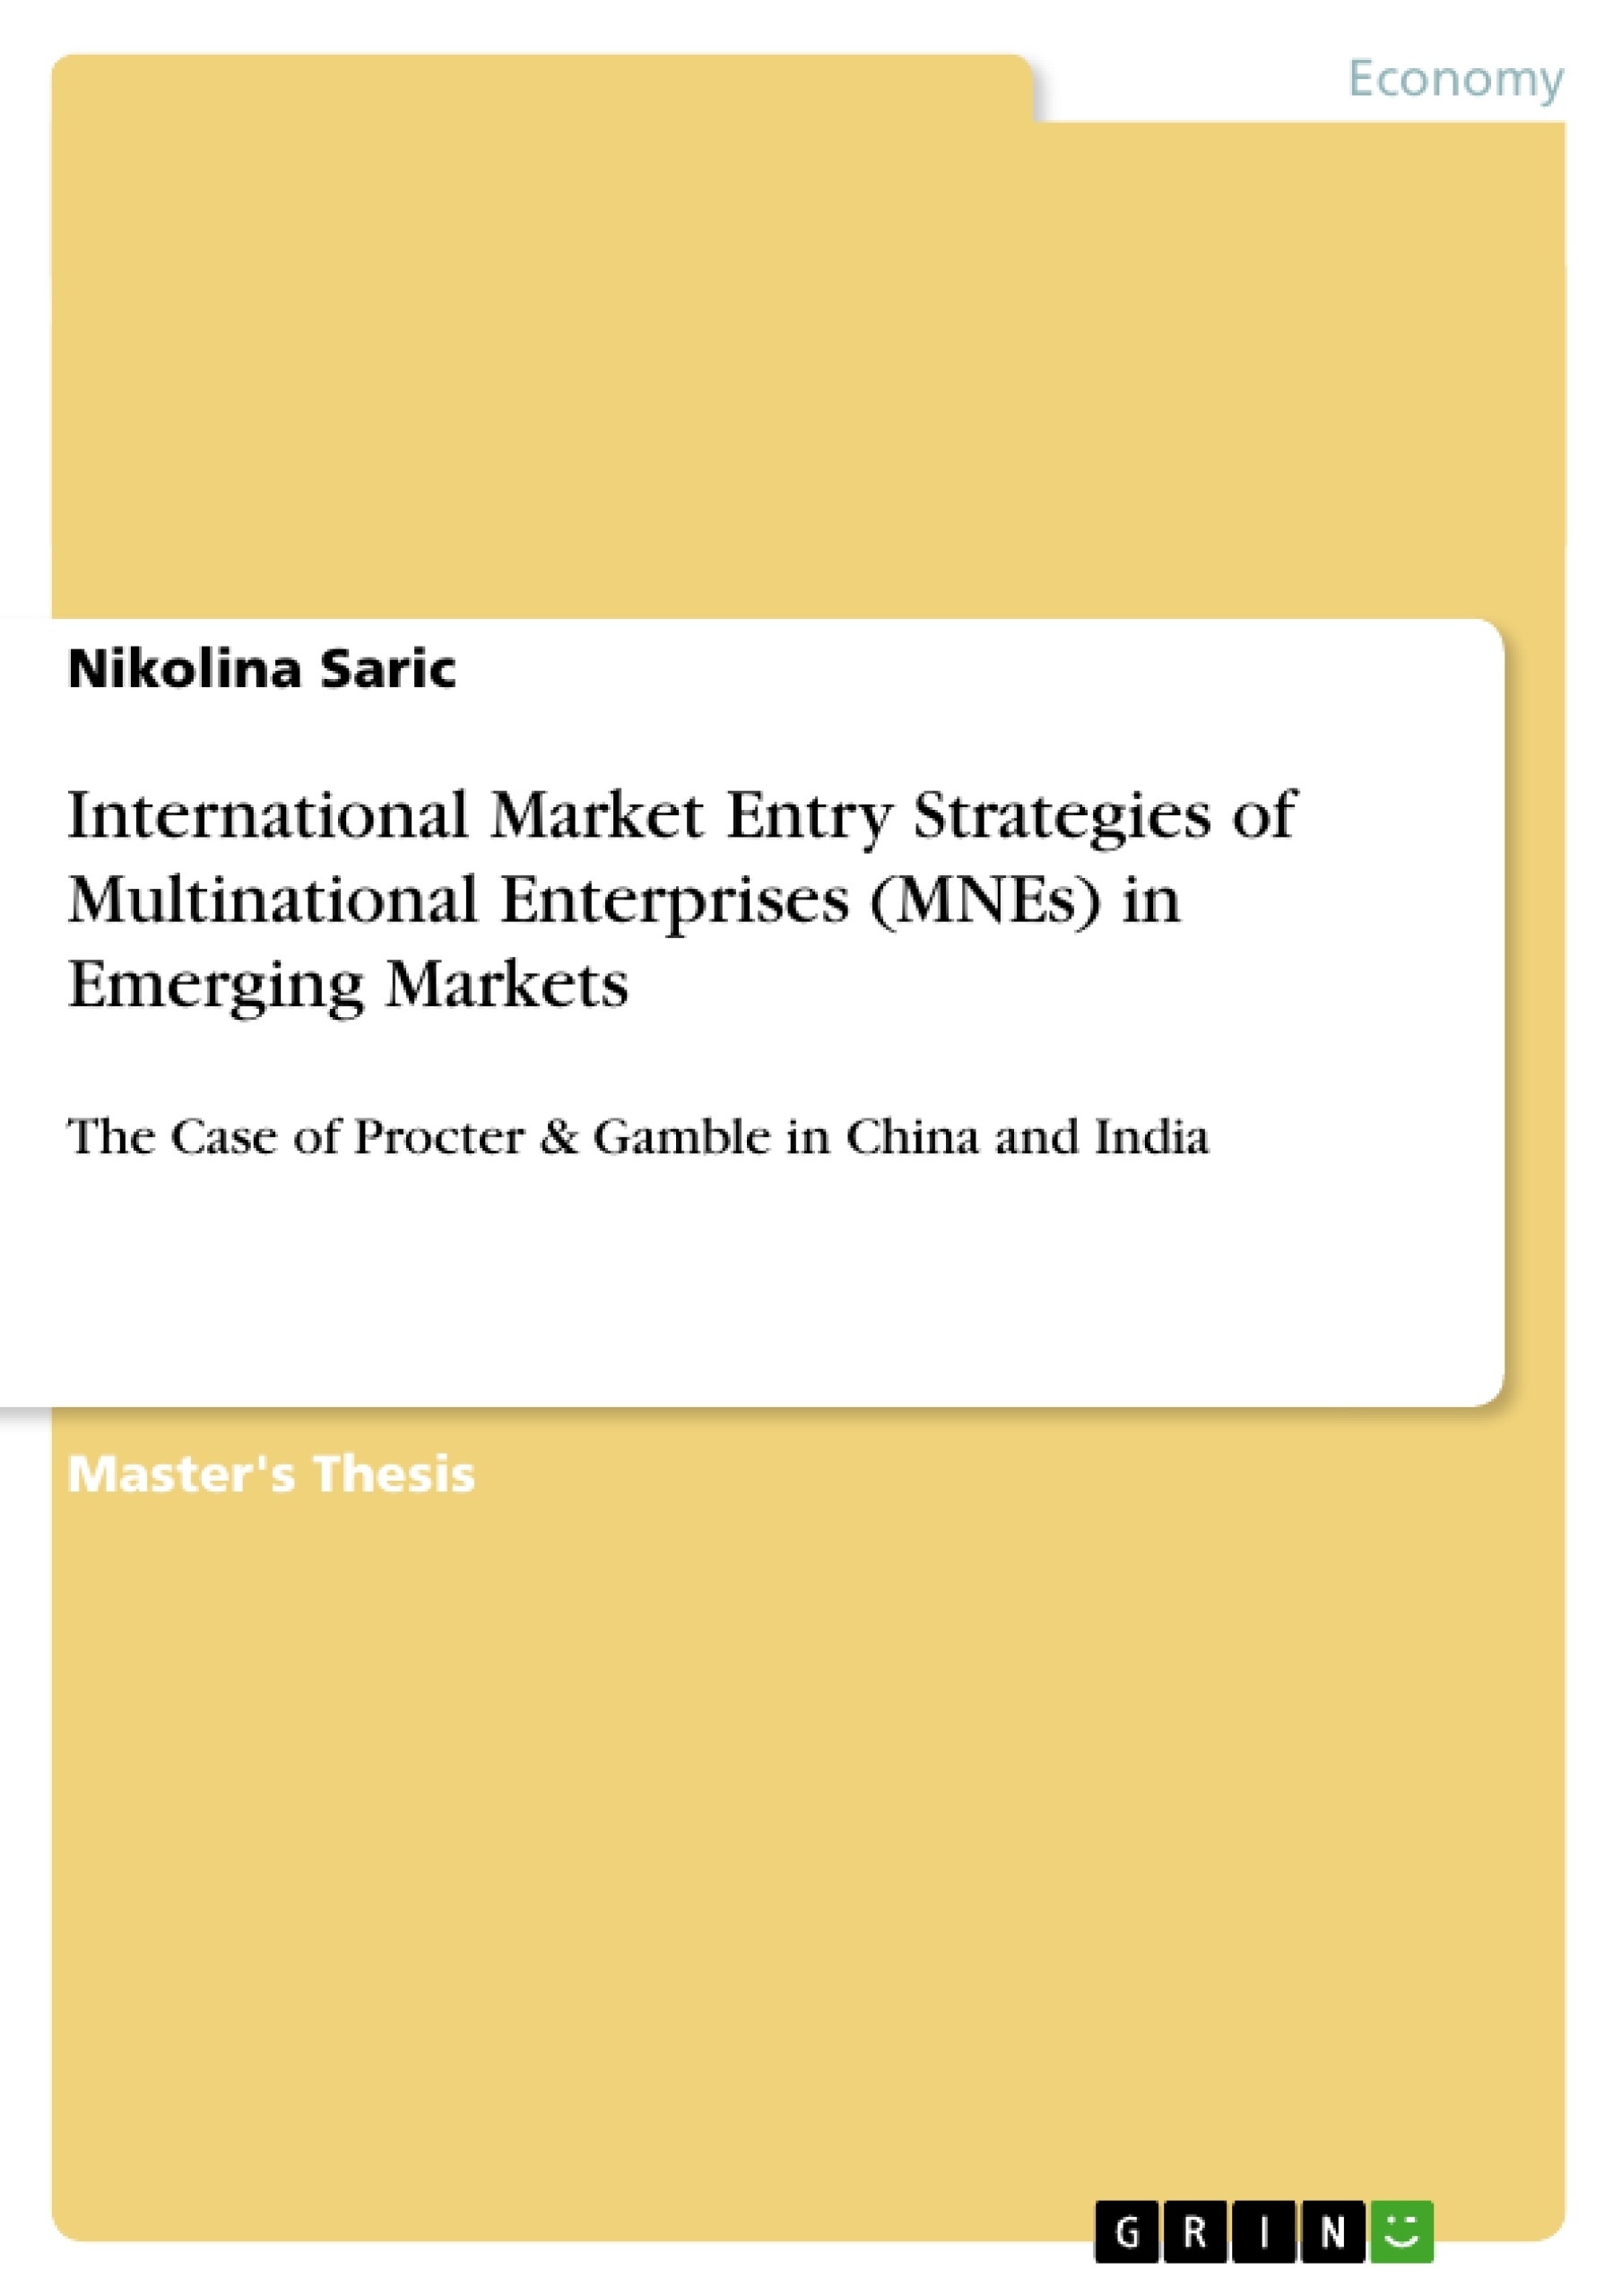 Title: International Market Entry Strategies of Multinational Enterprises (MNEs) in Emerging Markets